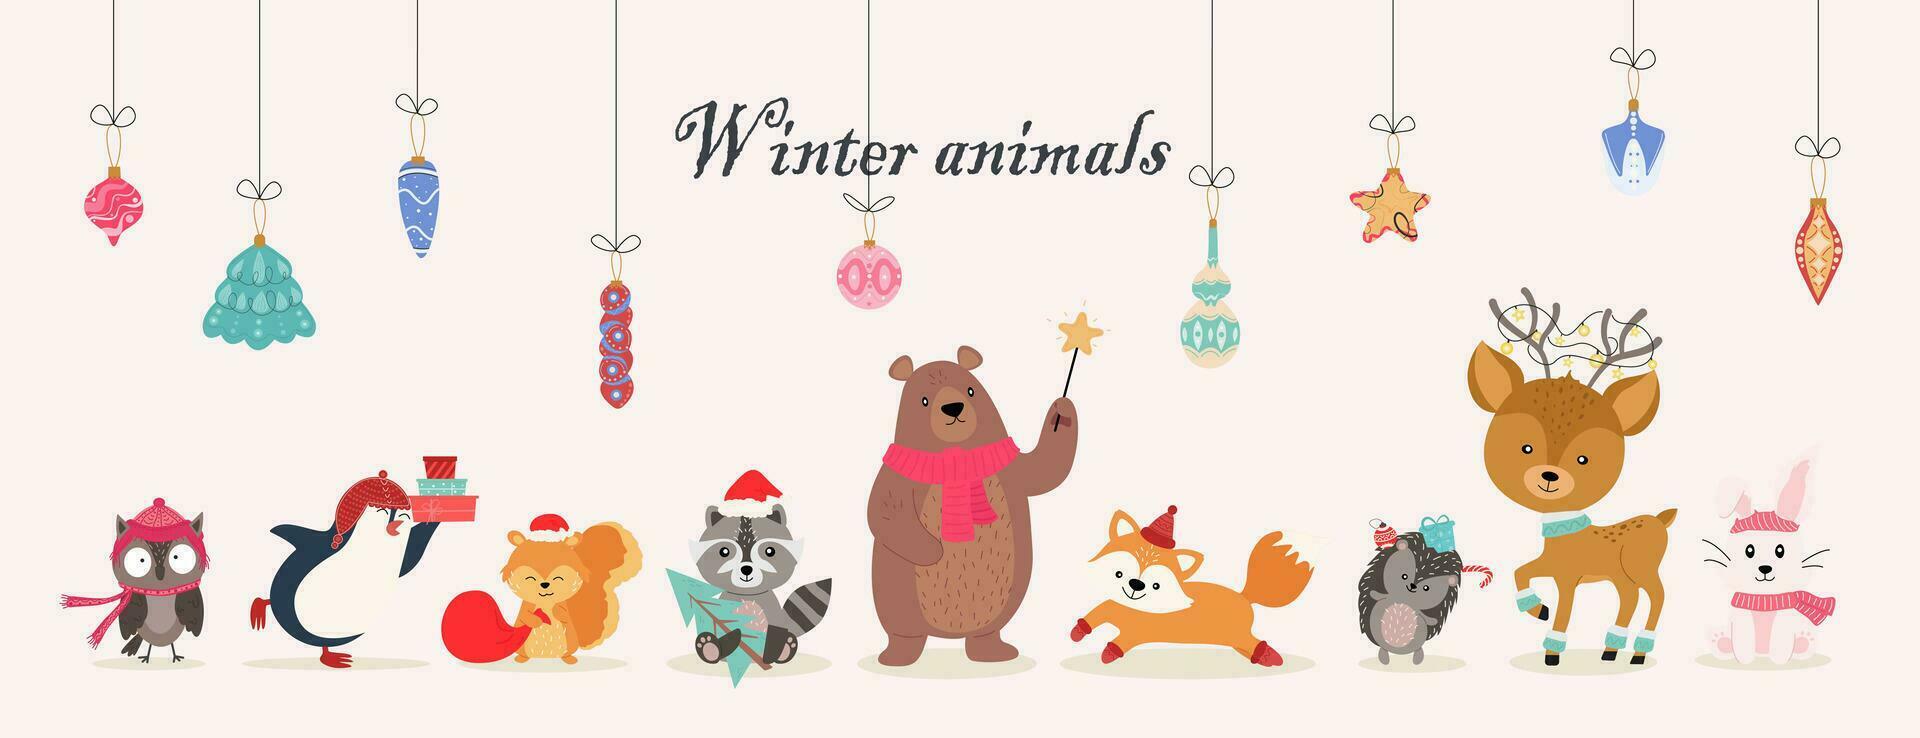 Inscription winter animals. Christmas characters - animals, bear, raccoon, squirrel, hedgehog, fox, owl, hare, penguin. New Year's balls. Vector illustration.